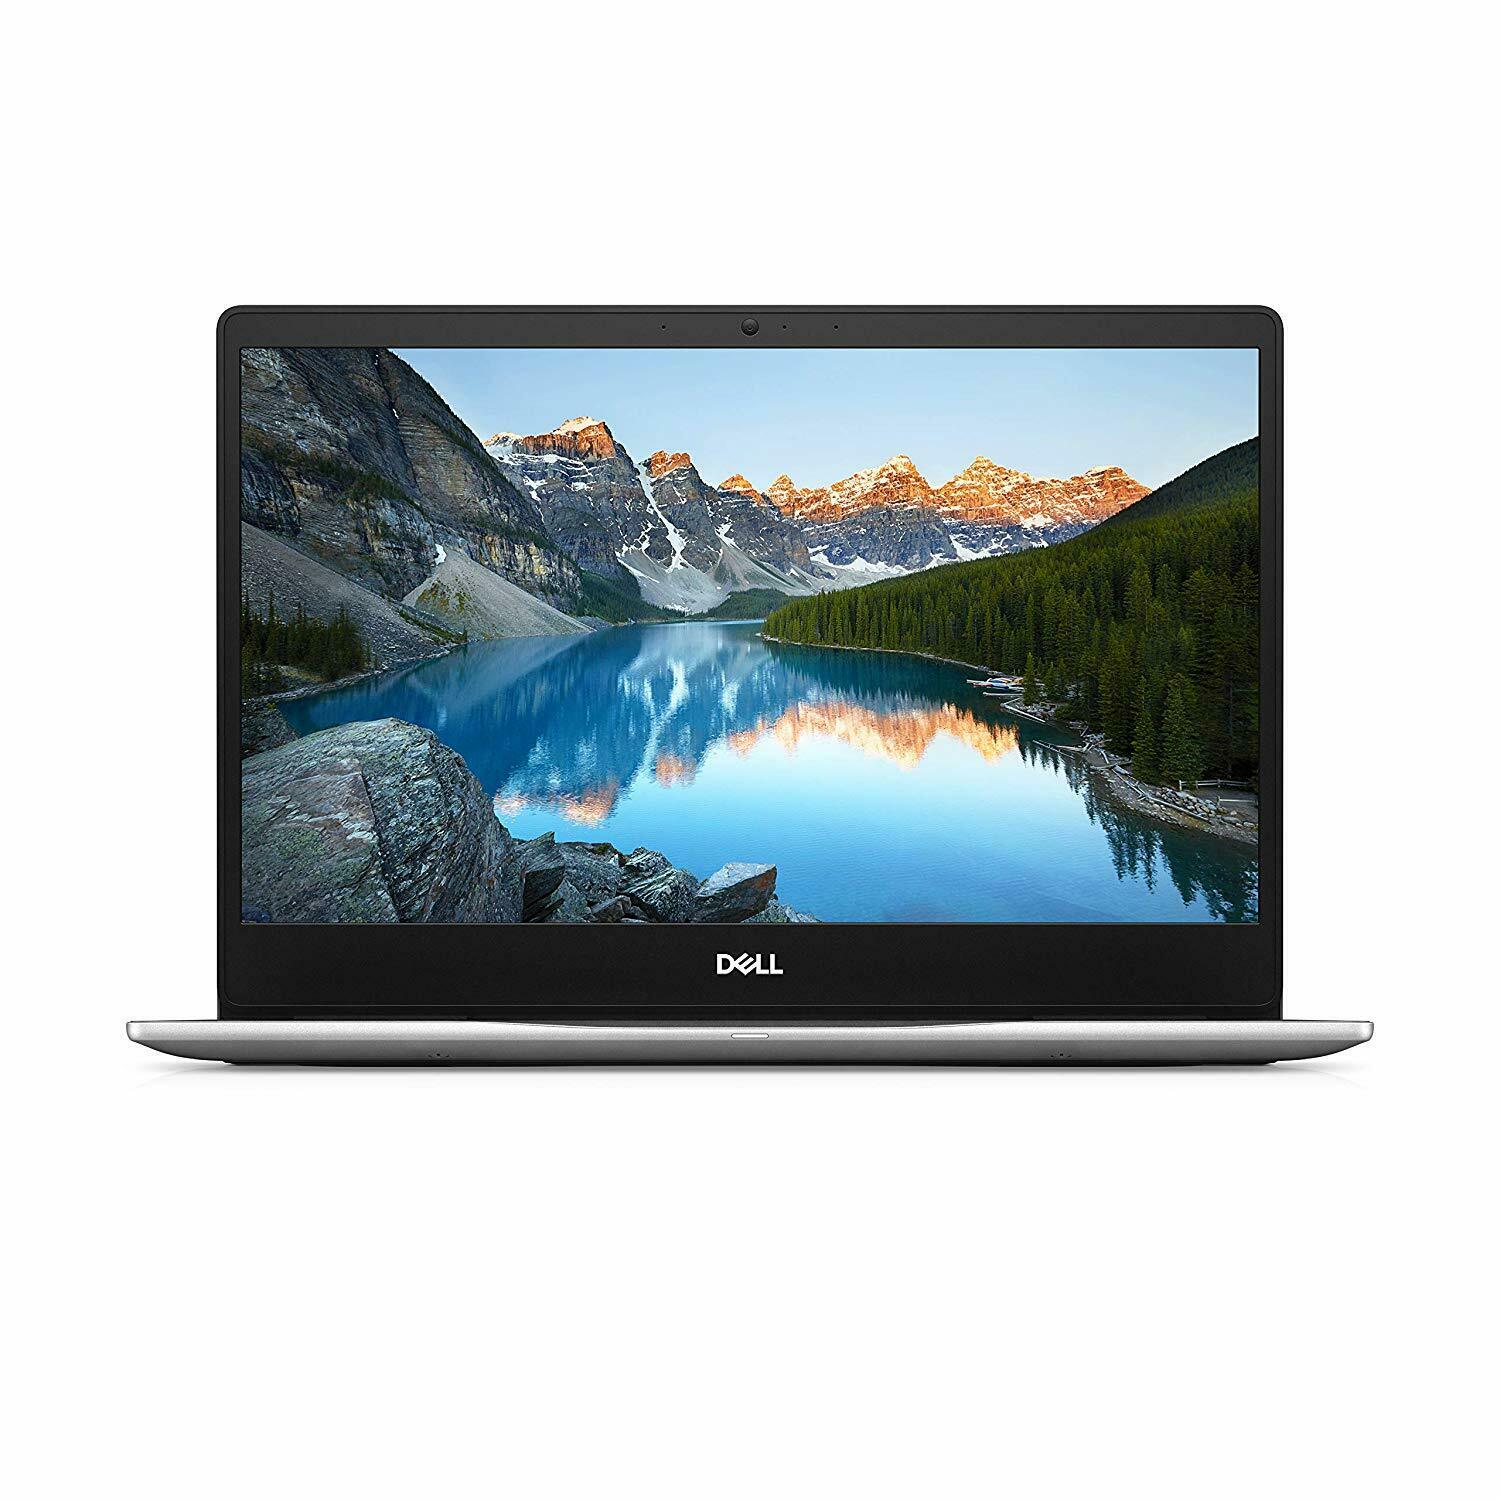 Dell Inspiron 13 7370 Laptop Intel Core i5-8250u 8GB RAM 256GB SSD 13.3” - Silver